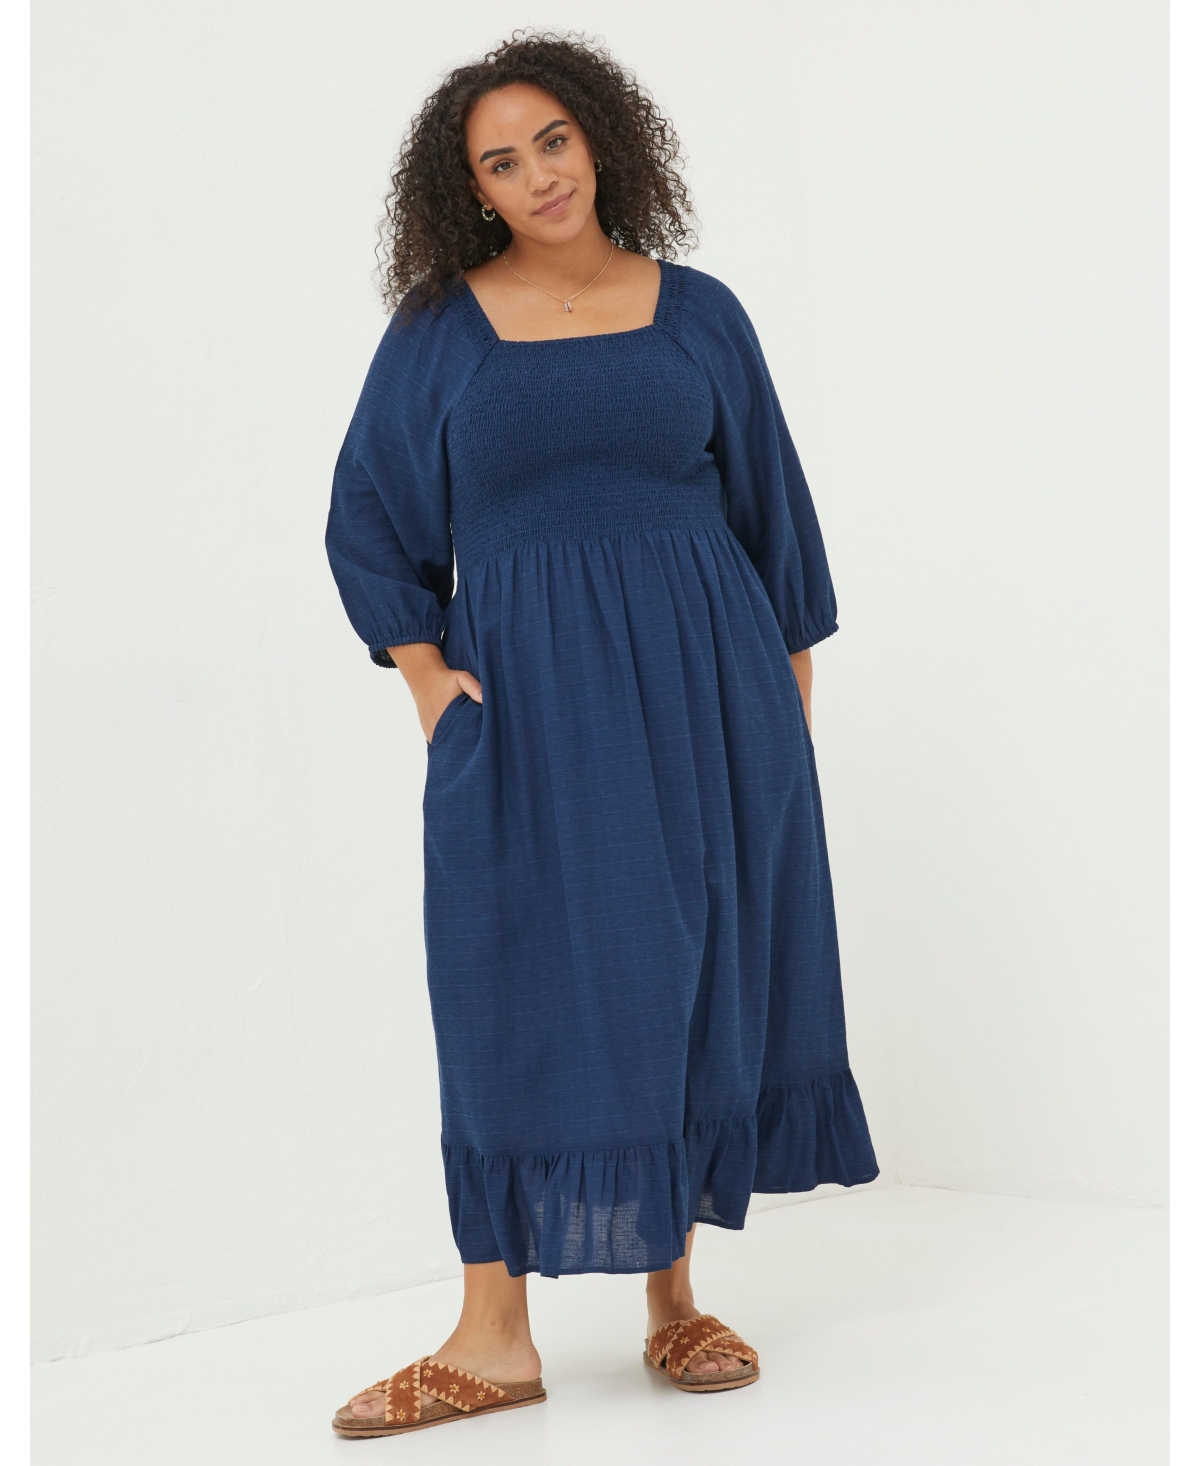 Women's Plus Size Adele Midi Dress - Bright blue